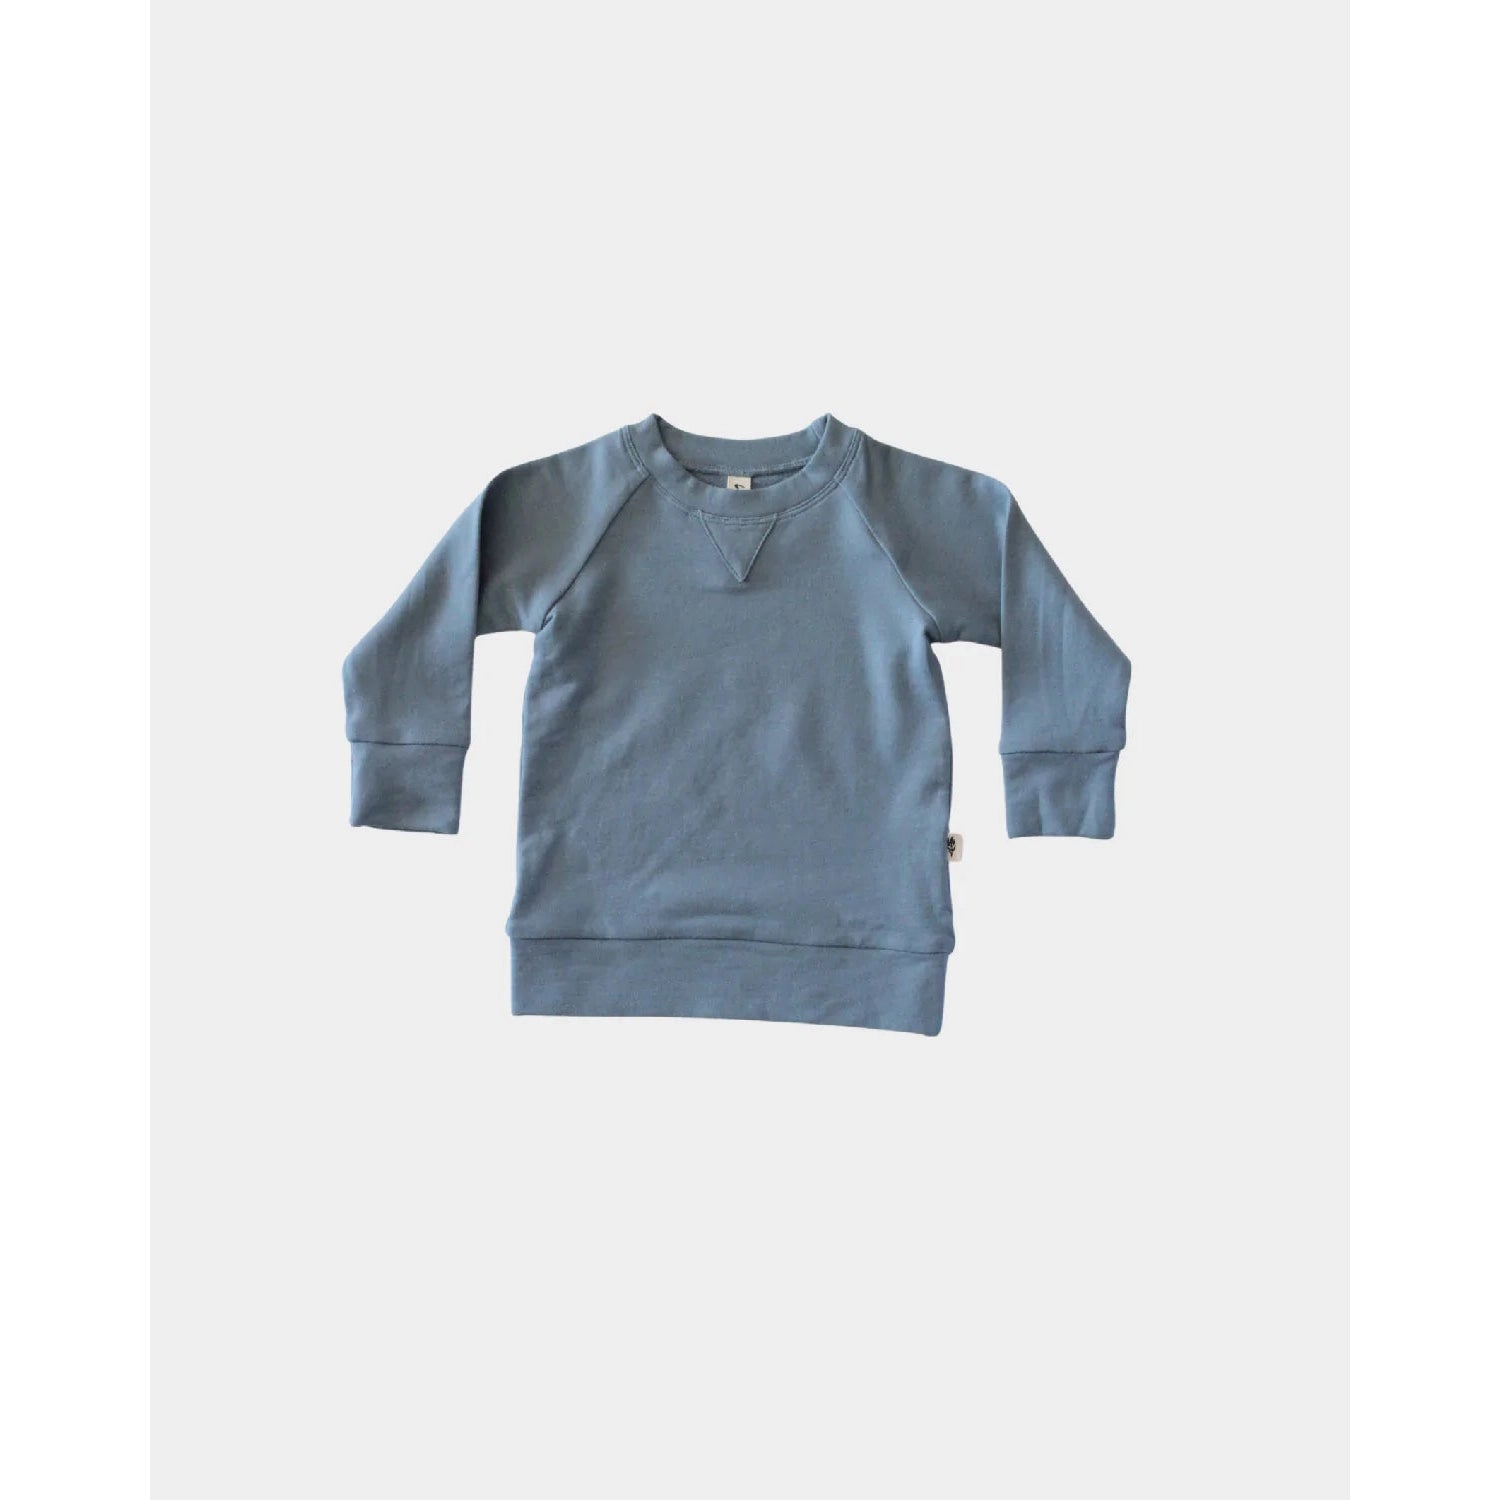 Baby Sprouts Slate Blue Raglan Sweatshirt